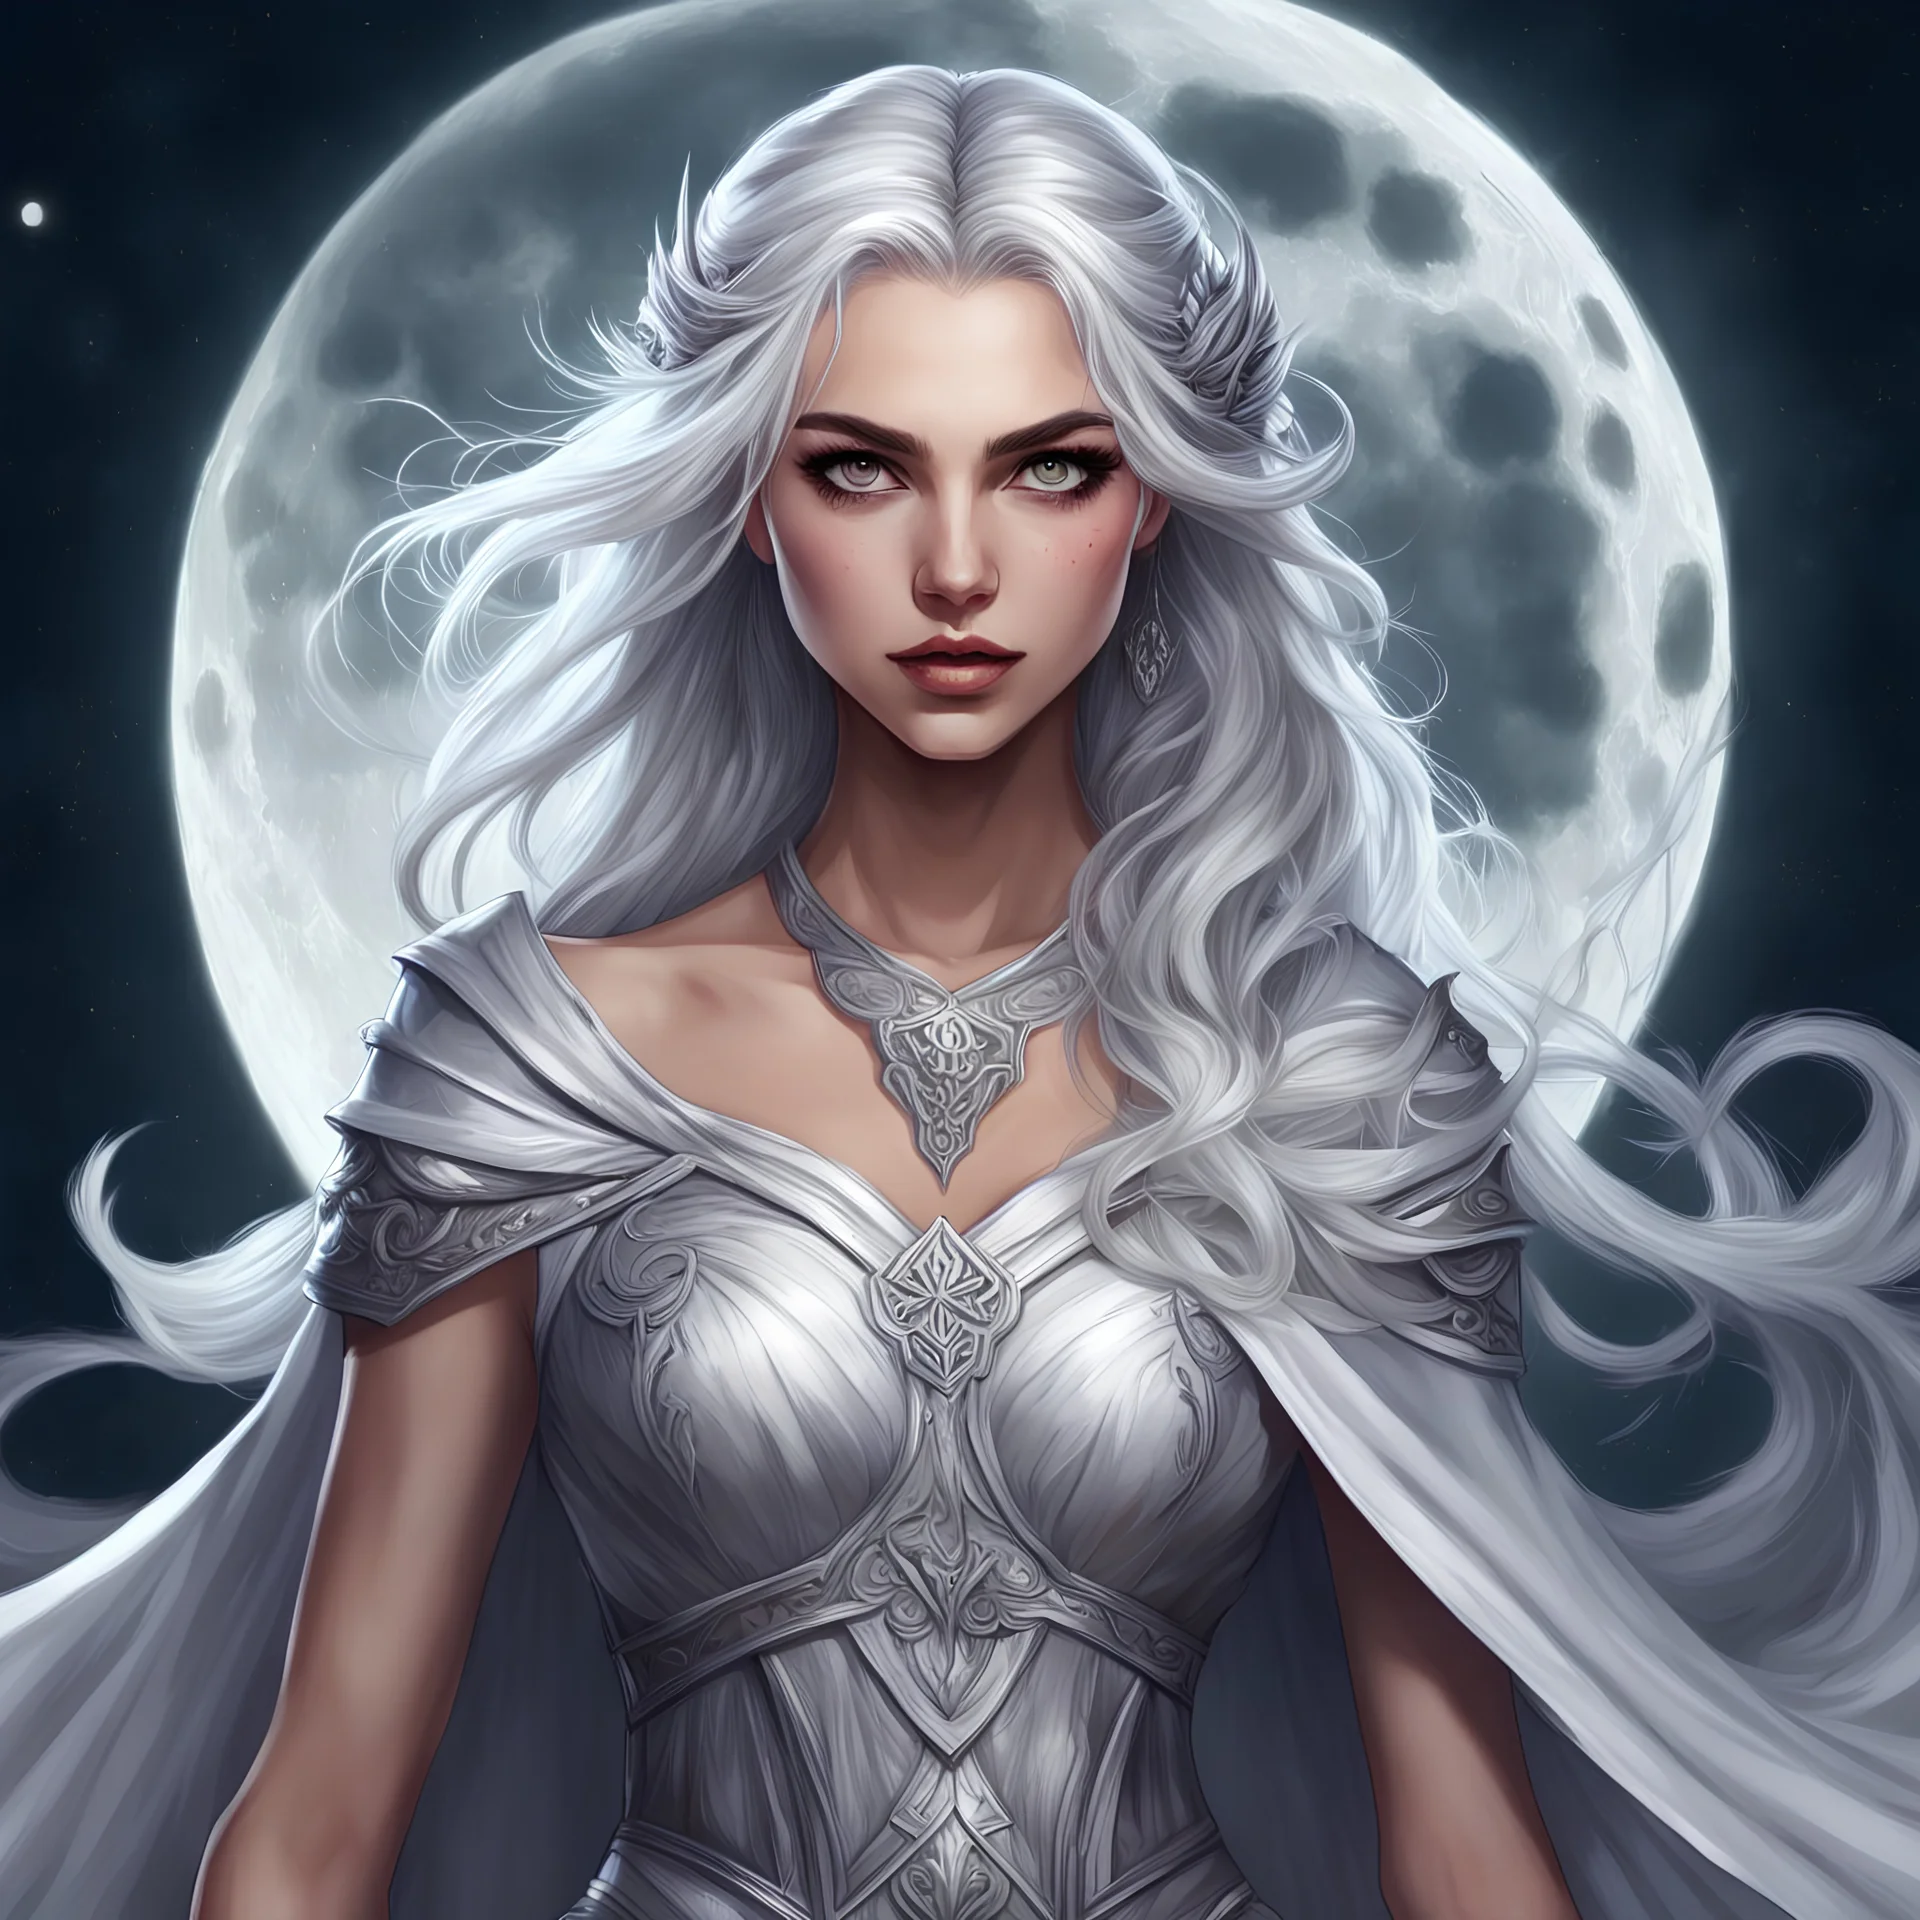 dungeons & dragons; portrait; digital art; teenager; female; cute; silver hair; silver eyes; greek dress; flowing dress; long veil; moonlight; moon goddess; fury